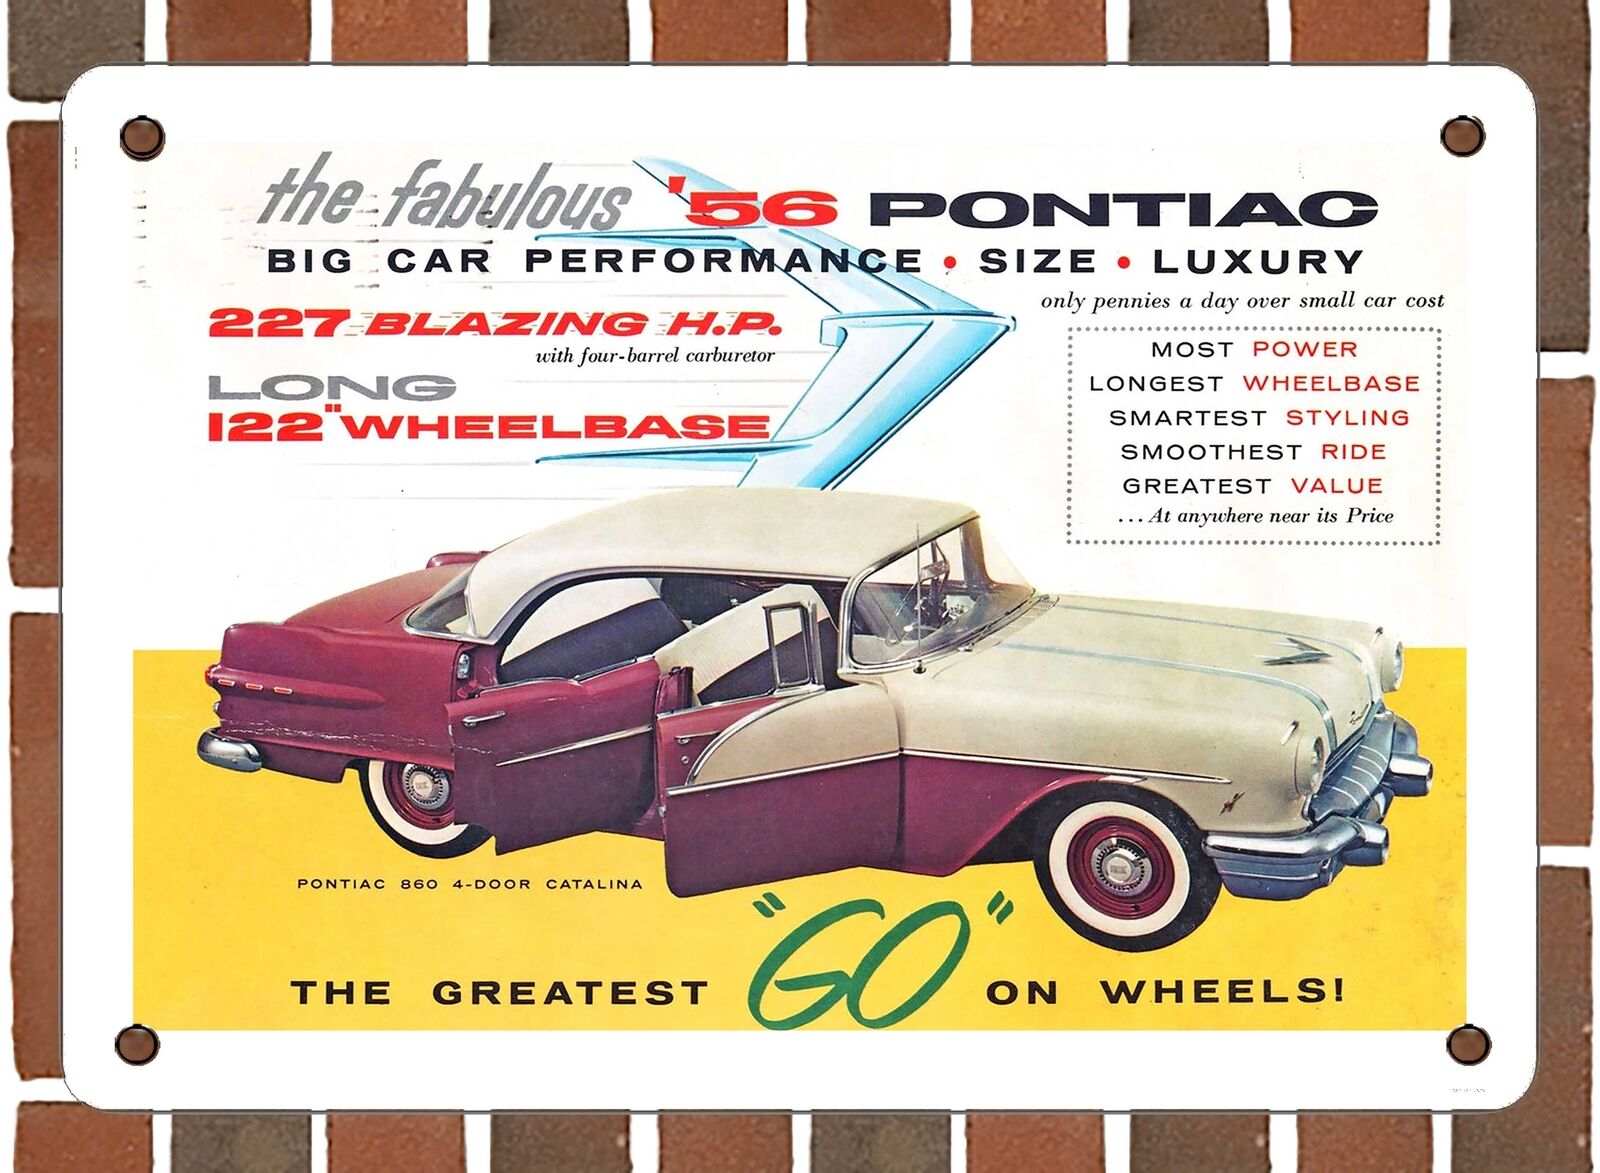 METAL SIGN - 1956 Pontiac 860 4 Door Catalina Hardtop - 10x14 Inches